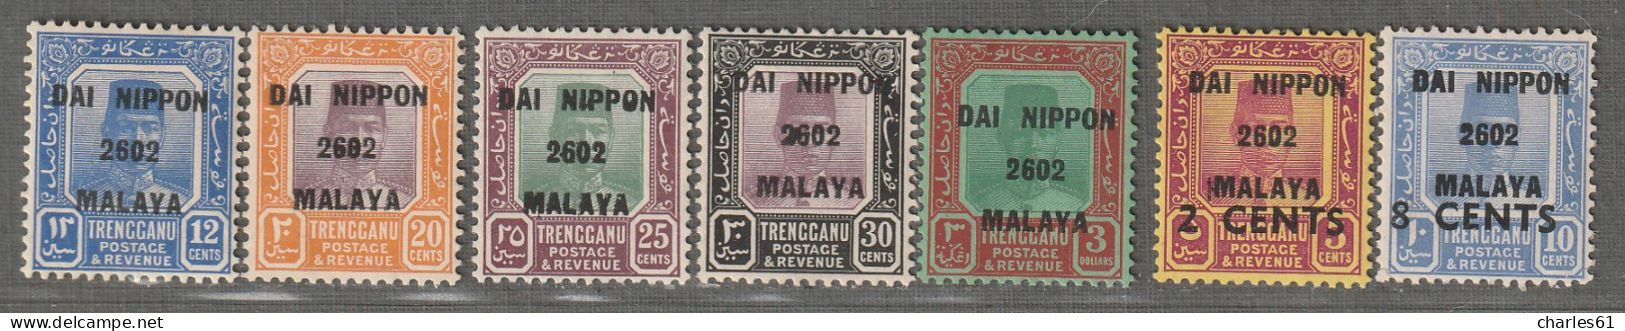 TRENGGANU - OCCUPATION JAPONAISE - N°29/35 * (1942) "Dai Nippon 2602 Malaya" - Japanisch Besetzung